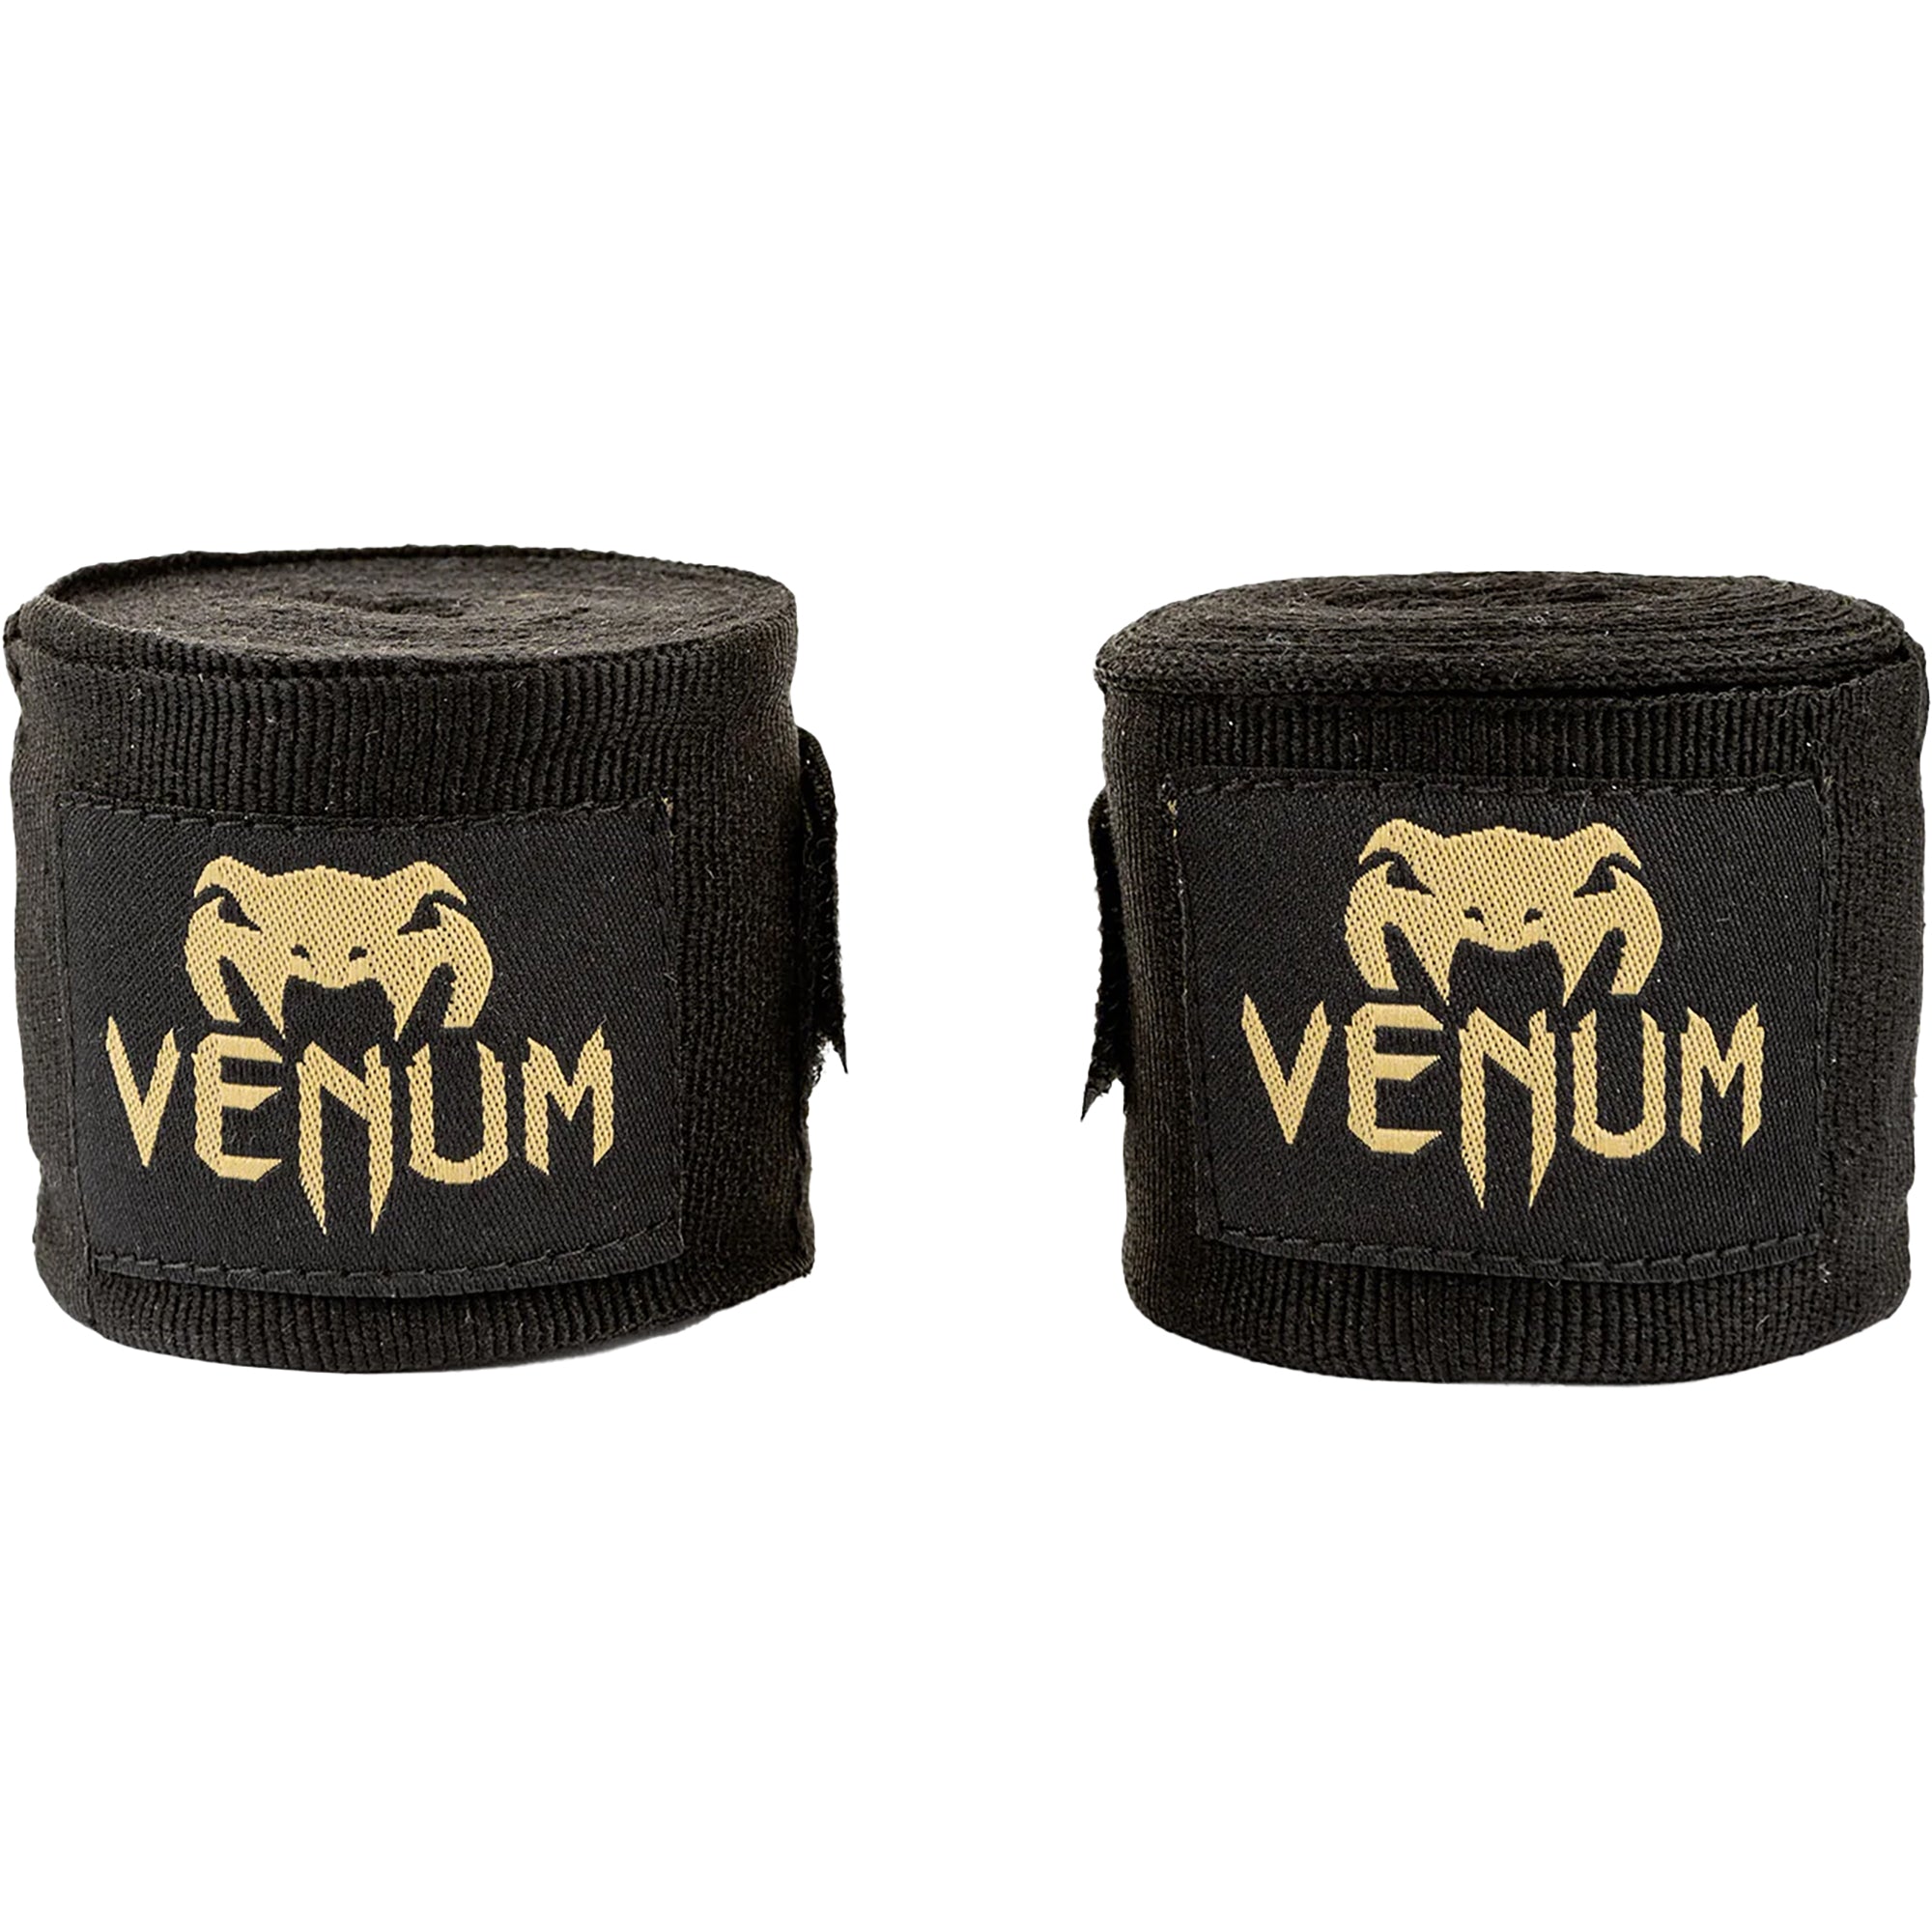 Venum Kontact 4m Boxing Handwraps - Black/Gold Venum